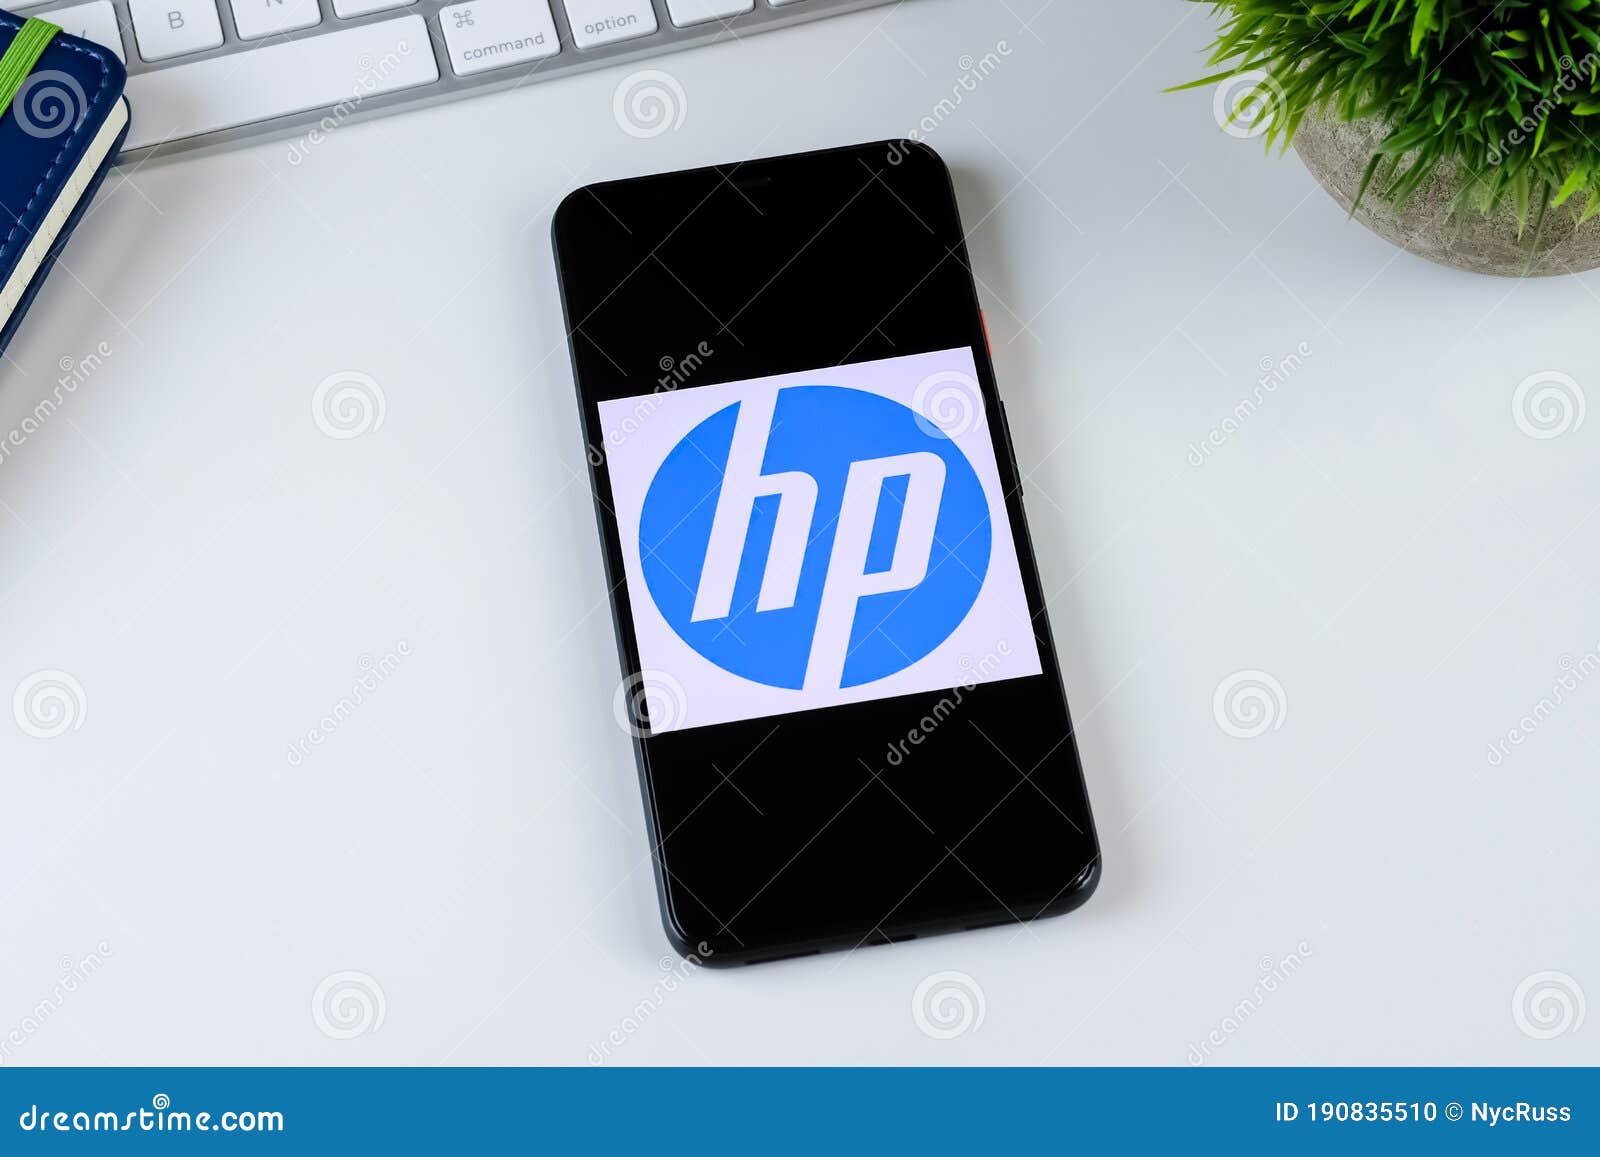 HP Print Service Plugin App on a Smartphone Screen. Editorial Image - Image of desk, service: 190835510